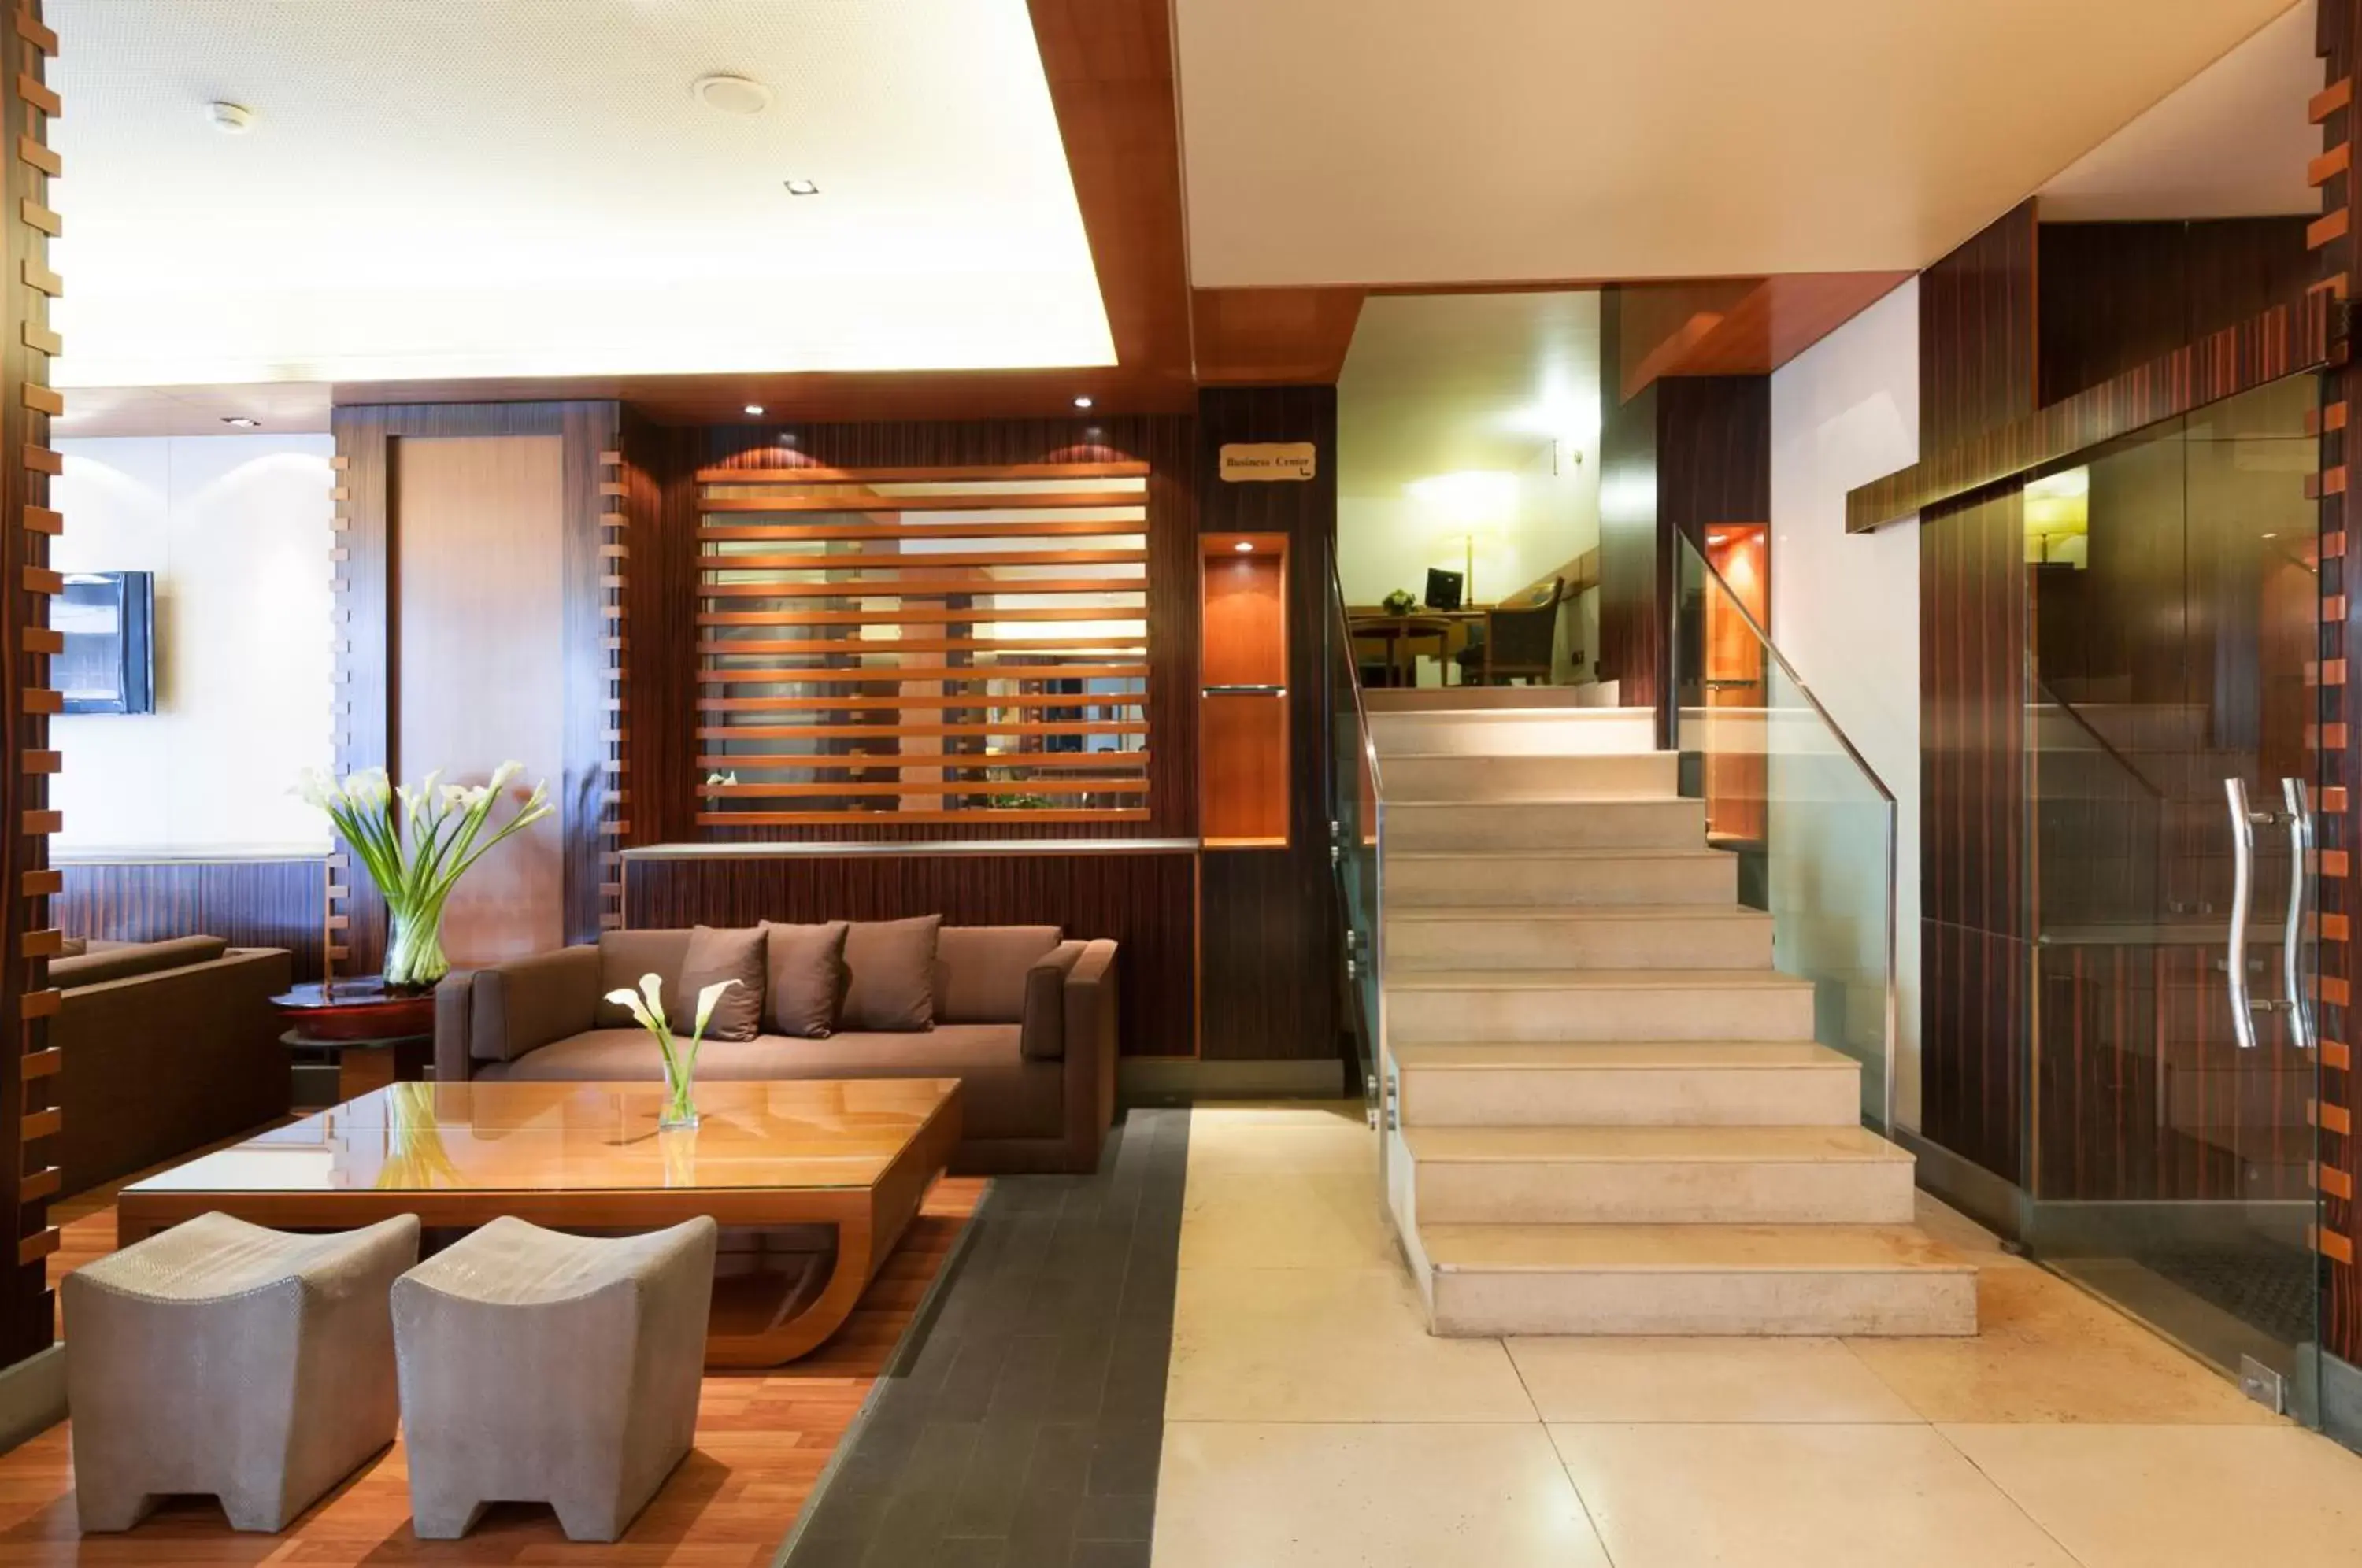 Lobby or reception in Le Commodore Hotel